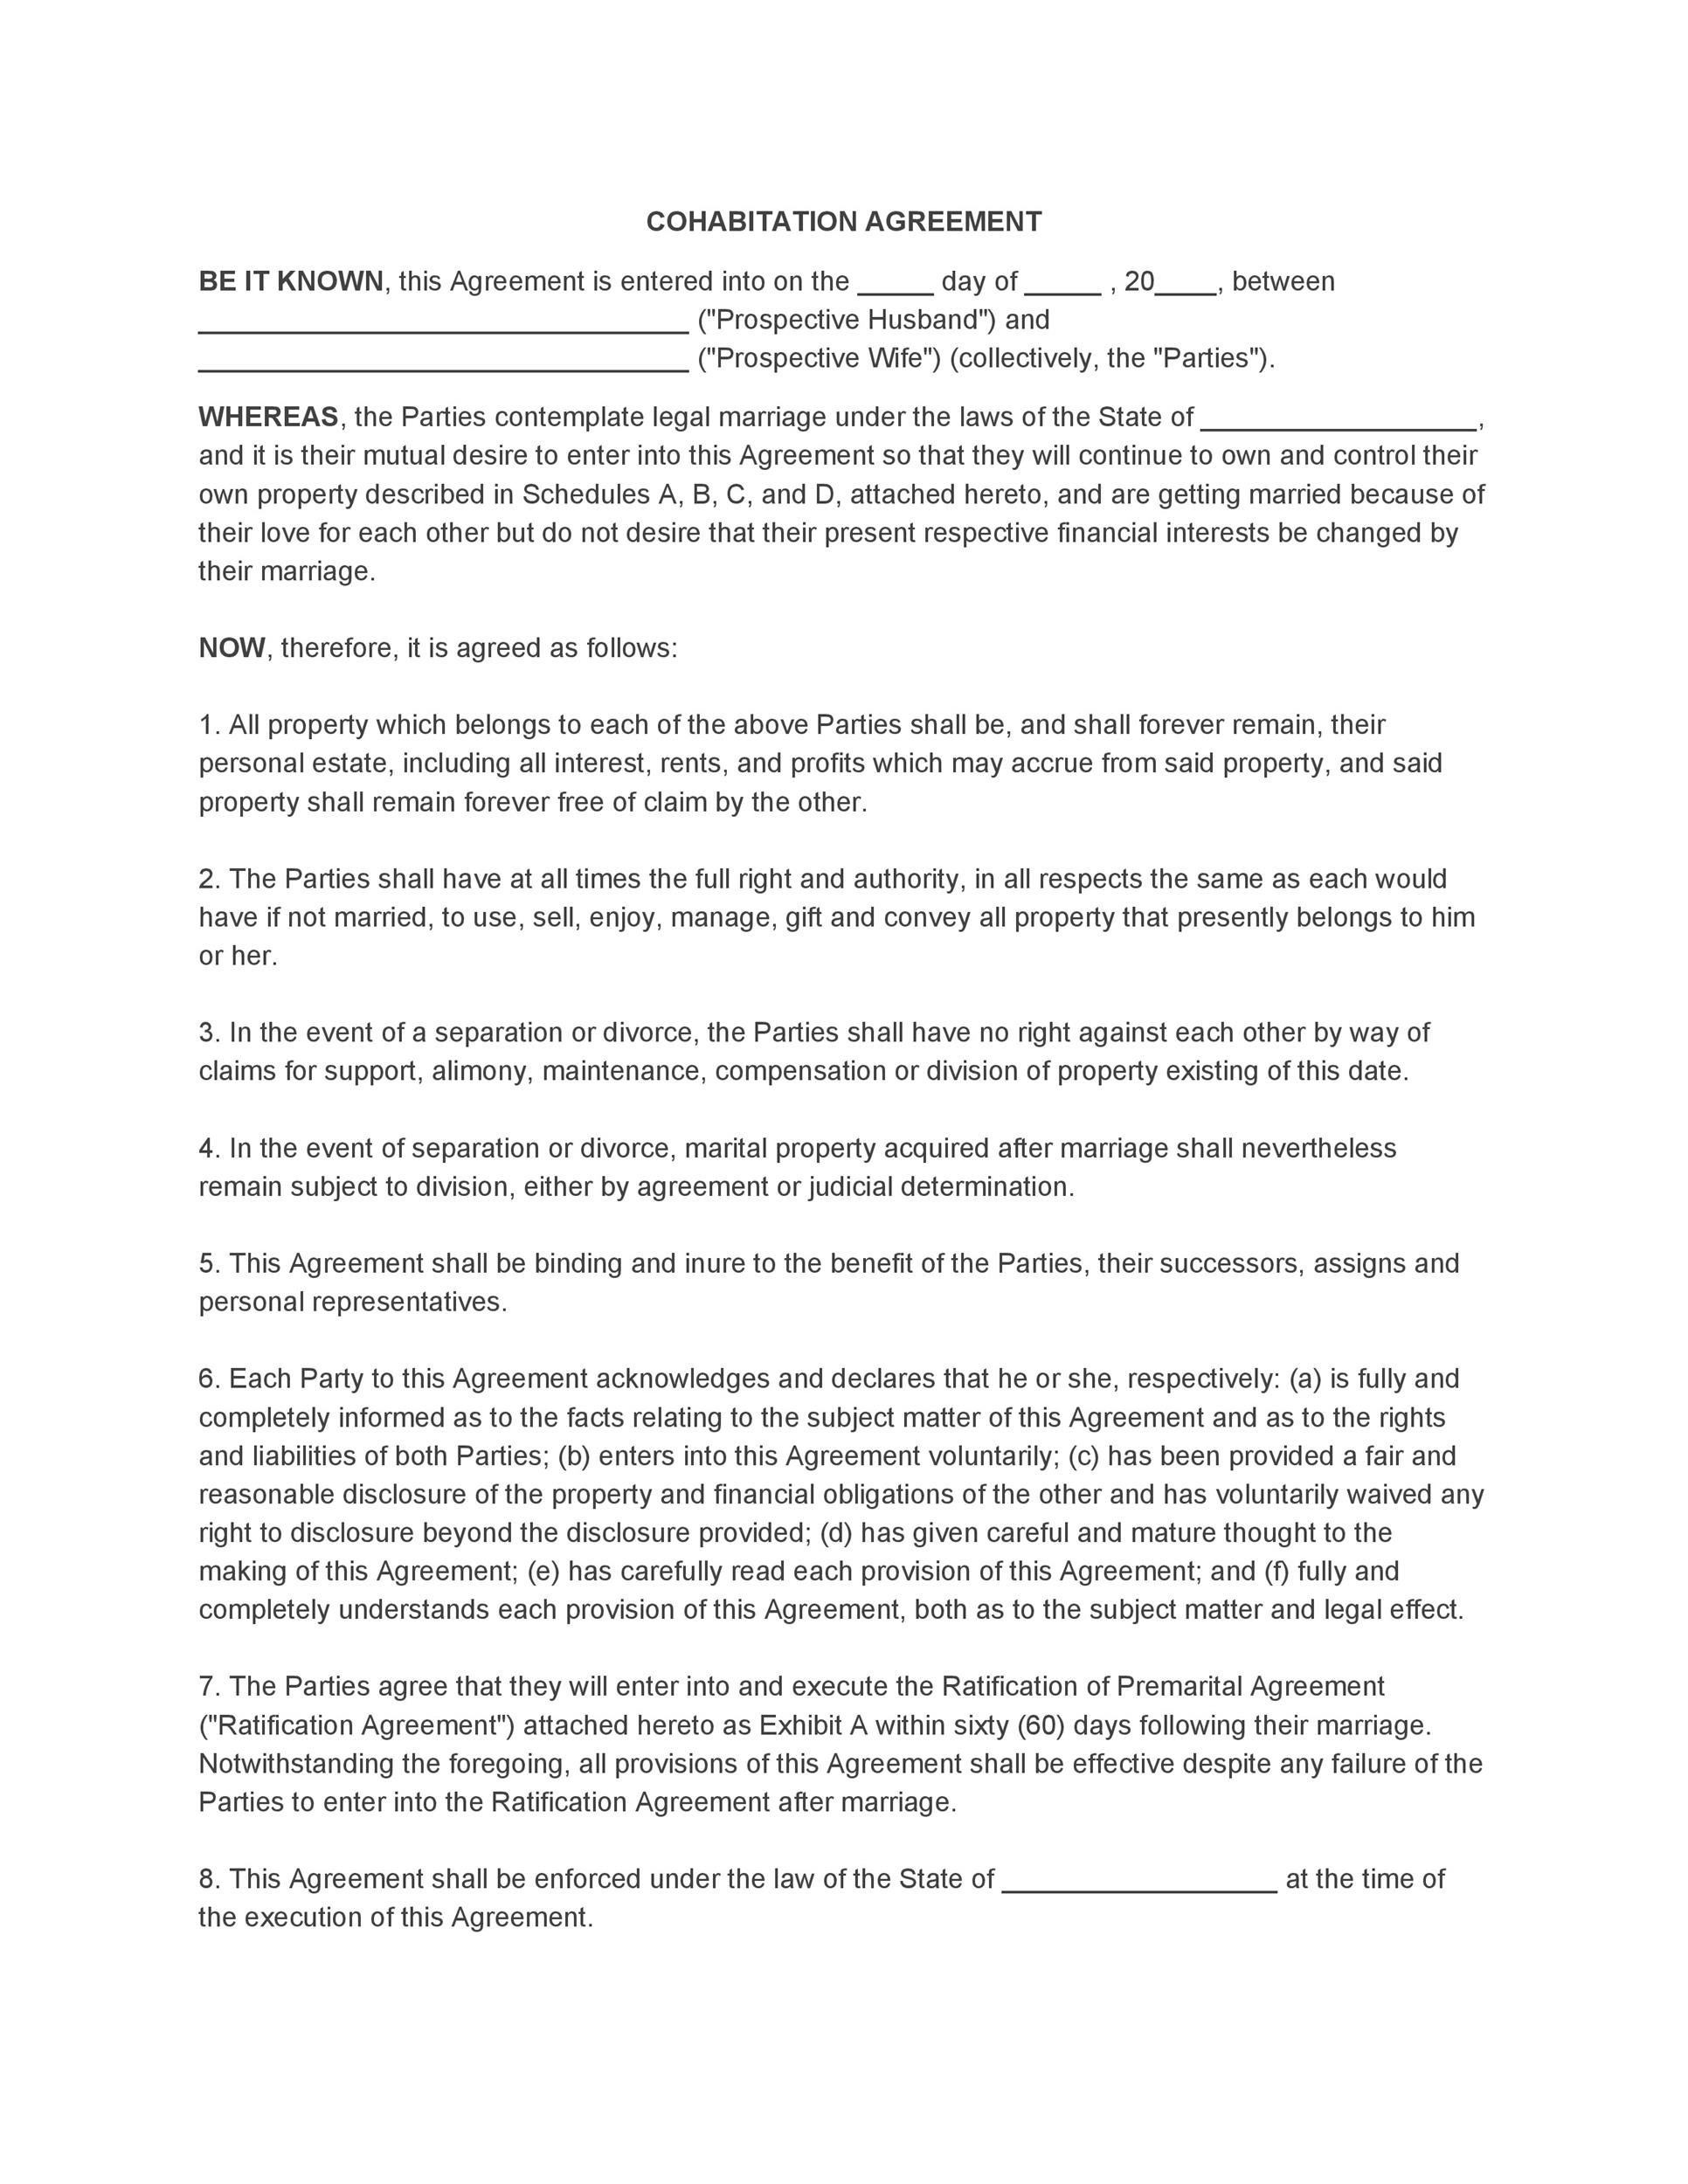 Free cohabitation agreement template 16